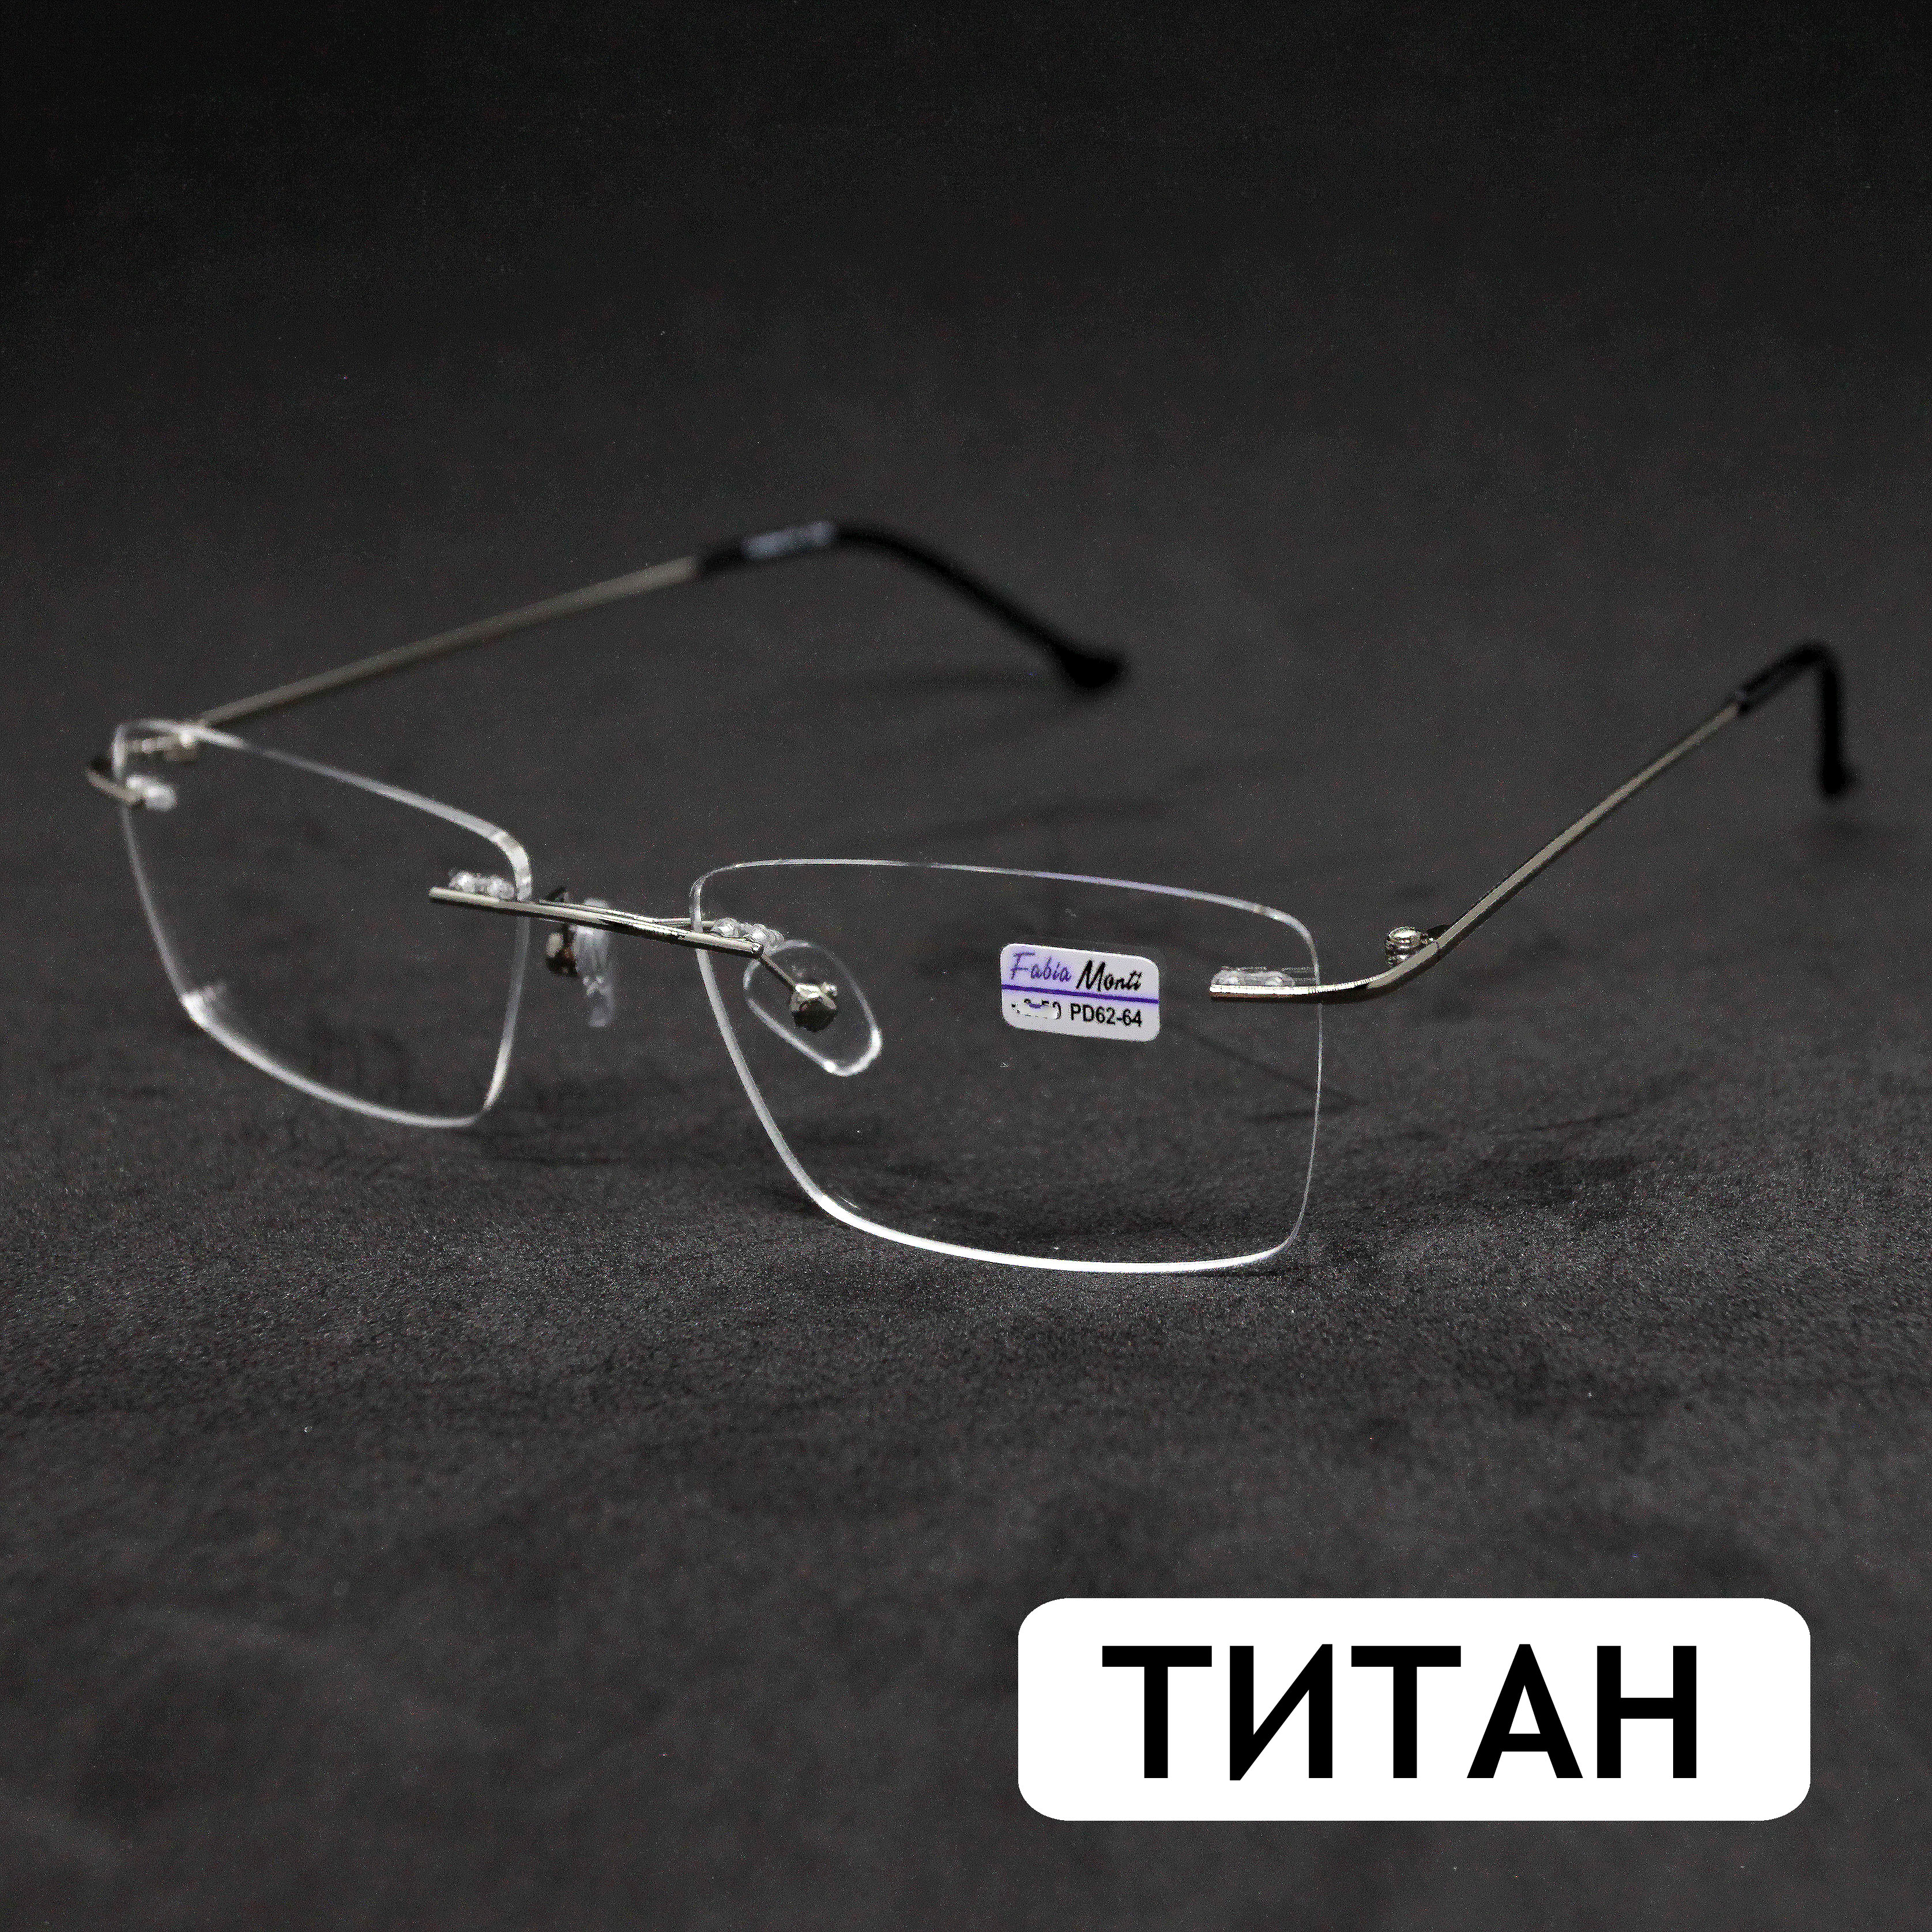 Безободковые очки FM 8959 -5.50, без футляра, оправа титан, серые, РЦ 62-64